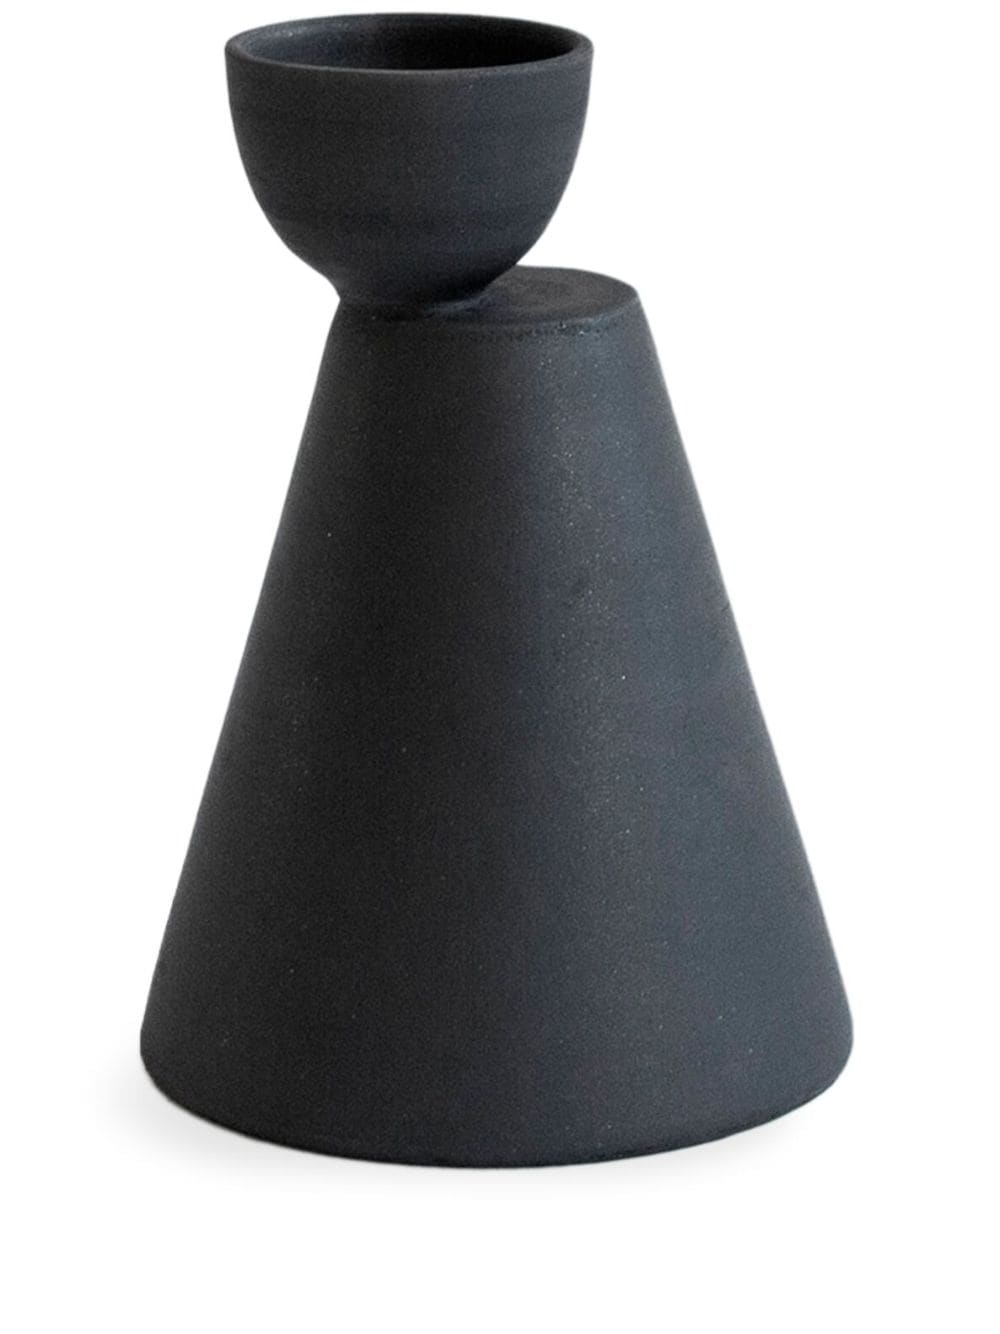 Origin Made Charred Cone Clay Vase (27cm) In Schwarz